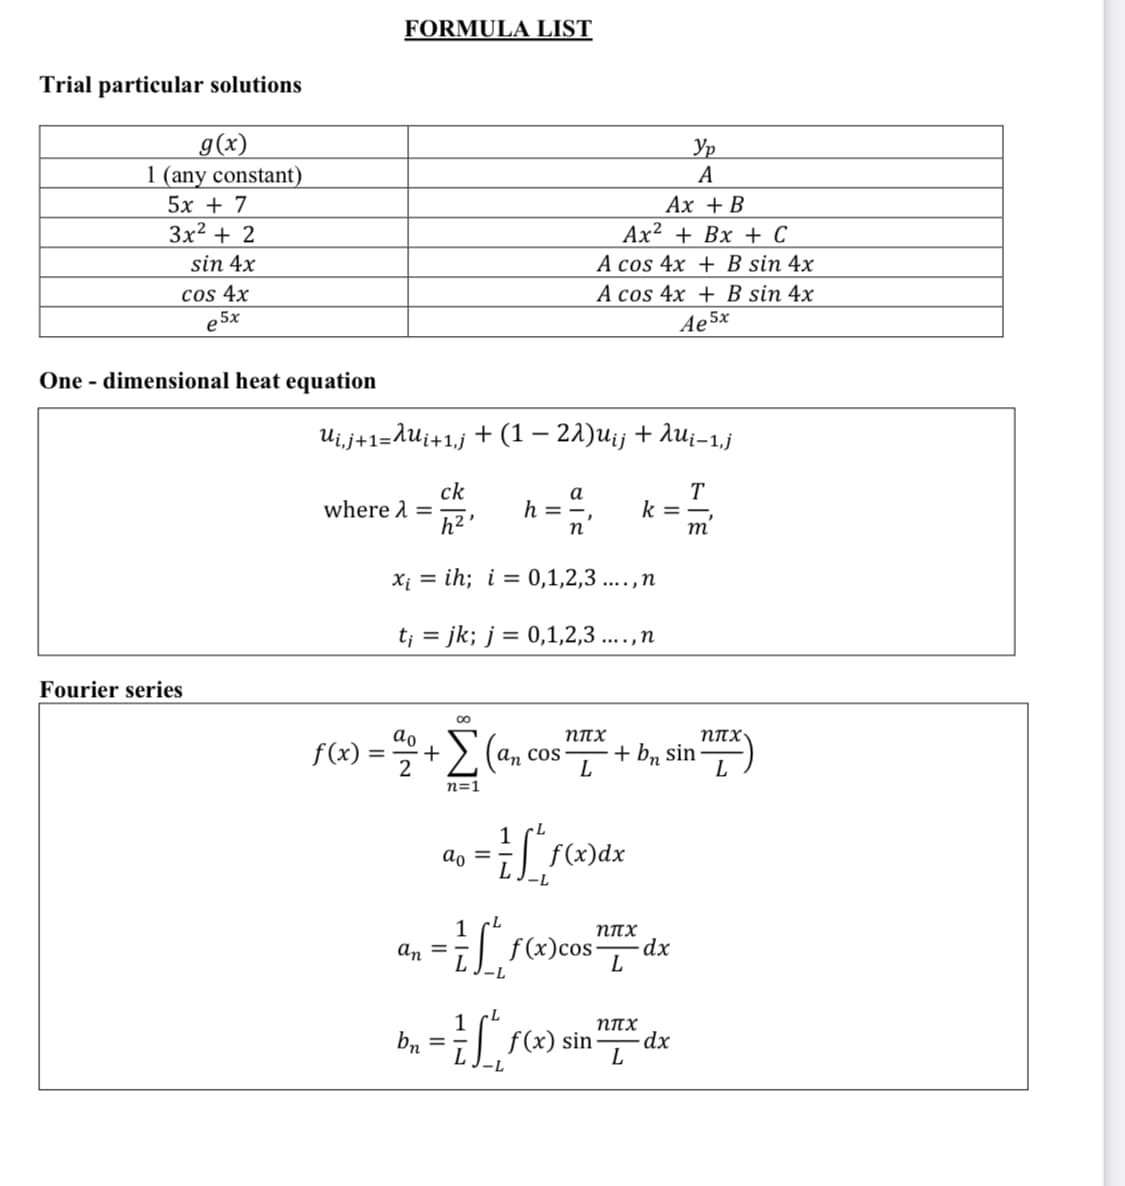 FORMULA LIST
Trial particular solutions
g(x)
1 (any constant)
5х + 7
3x? + 2
Ур
А
Ах + B
Ах2 + Вх + С
А cos 4x + B sin 4x
А cos 4x + B sin 4x
Ae 5x
sin 4x
cos 4x
e5x
One - dimensional heat equation
Uij+1=dUi+1,j + (1 – 21)uij + Au¡-1.j
ck
where 1 =
h²'
а
h =-,
T
k =-,
m
X; = ih; i = 0,1,2,3 ....,n
t; = jk; j = 0,1,2,3 ...,n
Fourier series
NTX
+ b, sin
ao
NTX
f(x)
2
ɑn cos
L
%3D
n=1
1
f(x)dx
L.
ao = -
1
an
NITX
= f(x)cos-
dx
--
1
NITX
bn =;| f(x) sin
L
--
